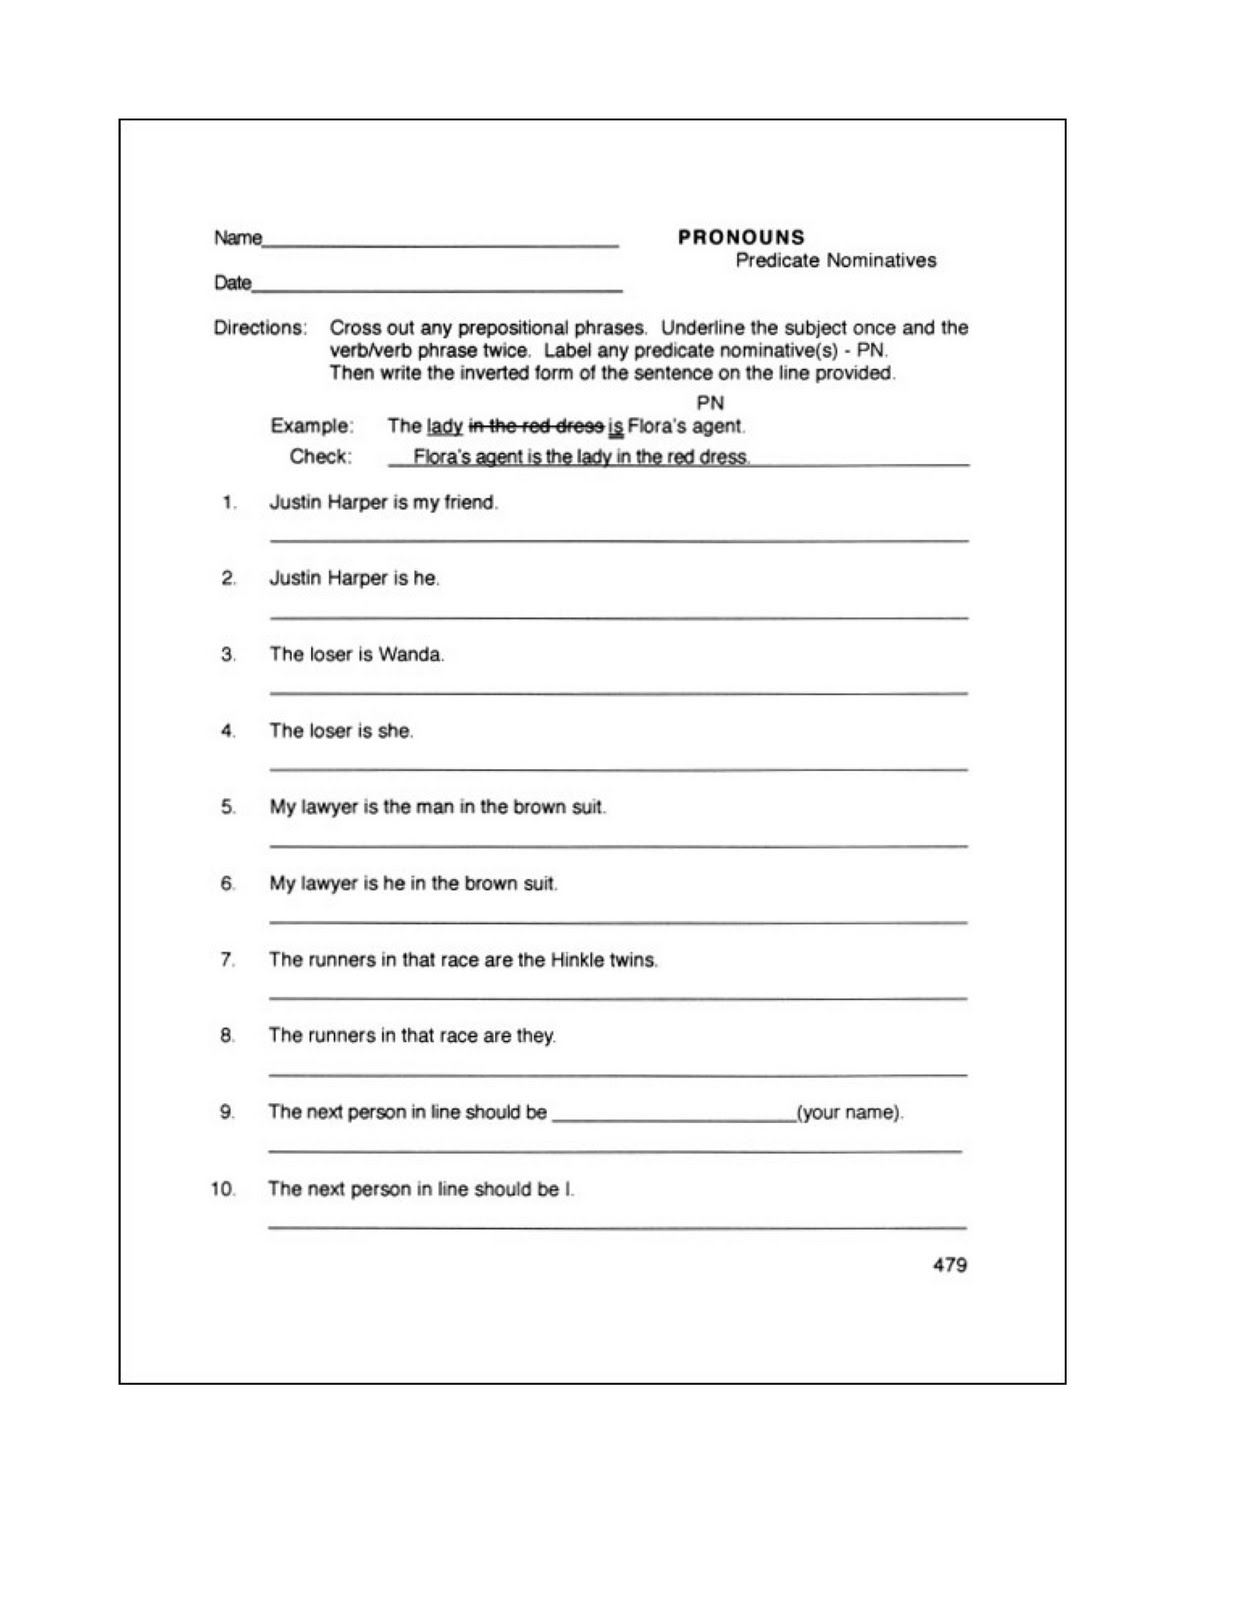 16 Best Images Of 10 Grade English Worksheets 9 Grade English Worksheets 10th Grade English